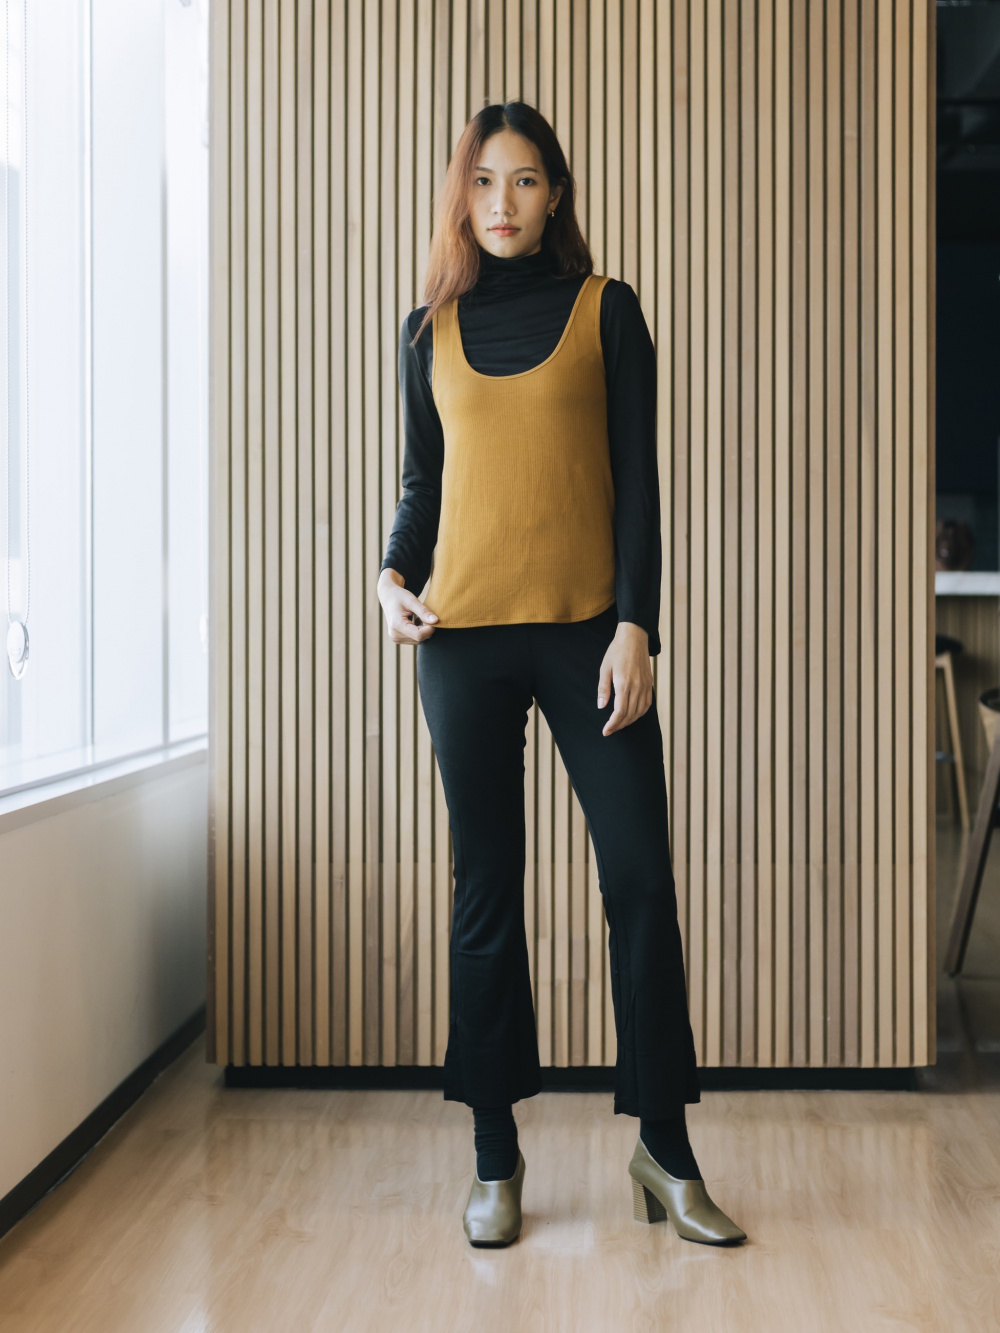 Check styling ideas for「Mame Kurogouchi HEATTECH Wool Blend Flare